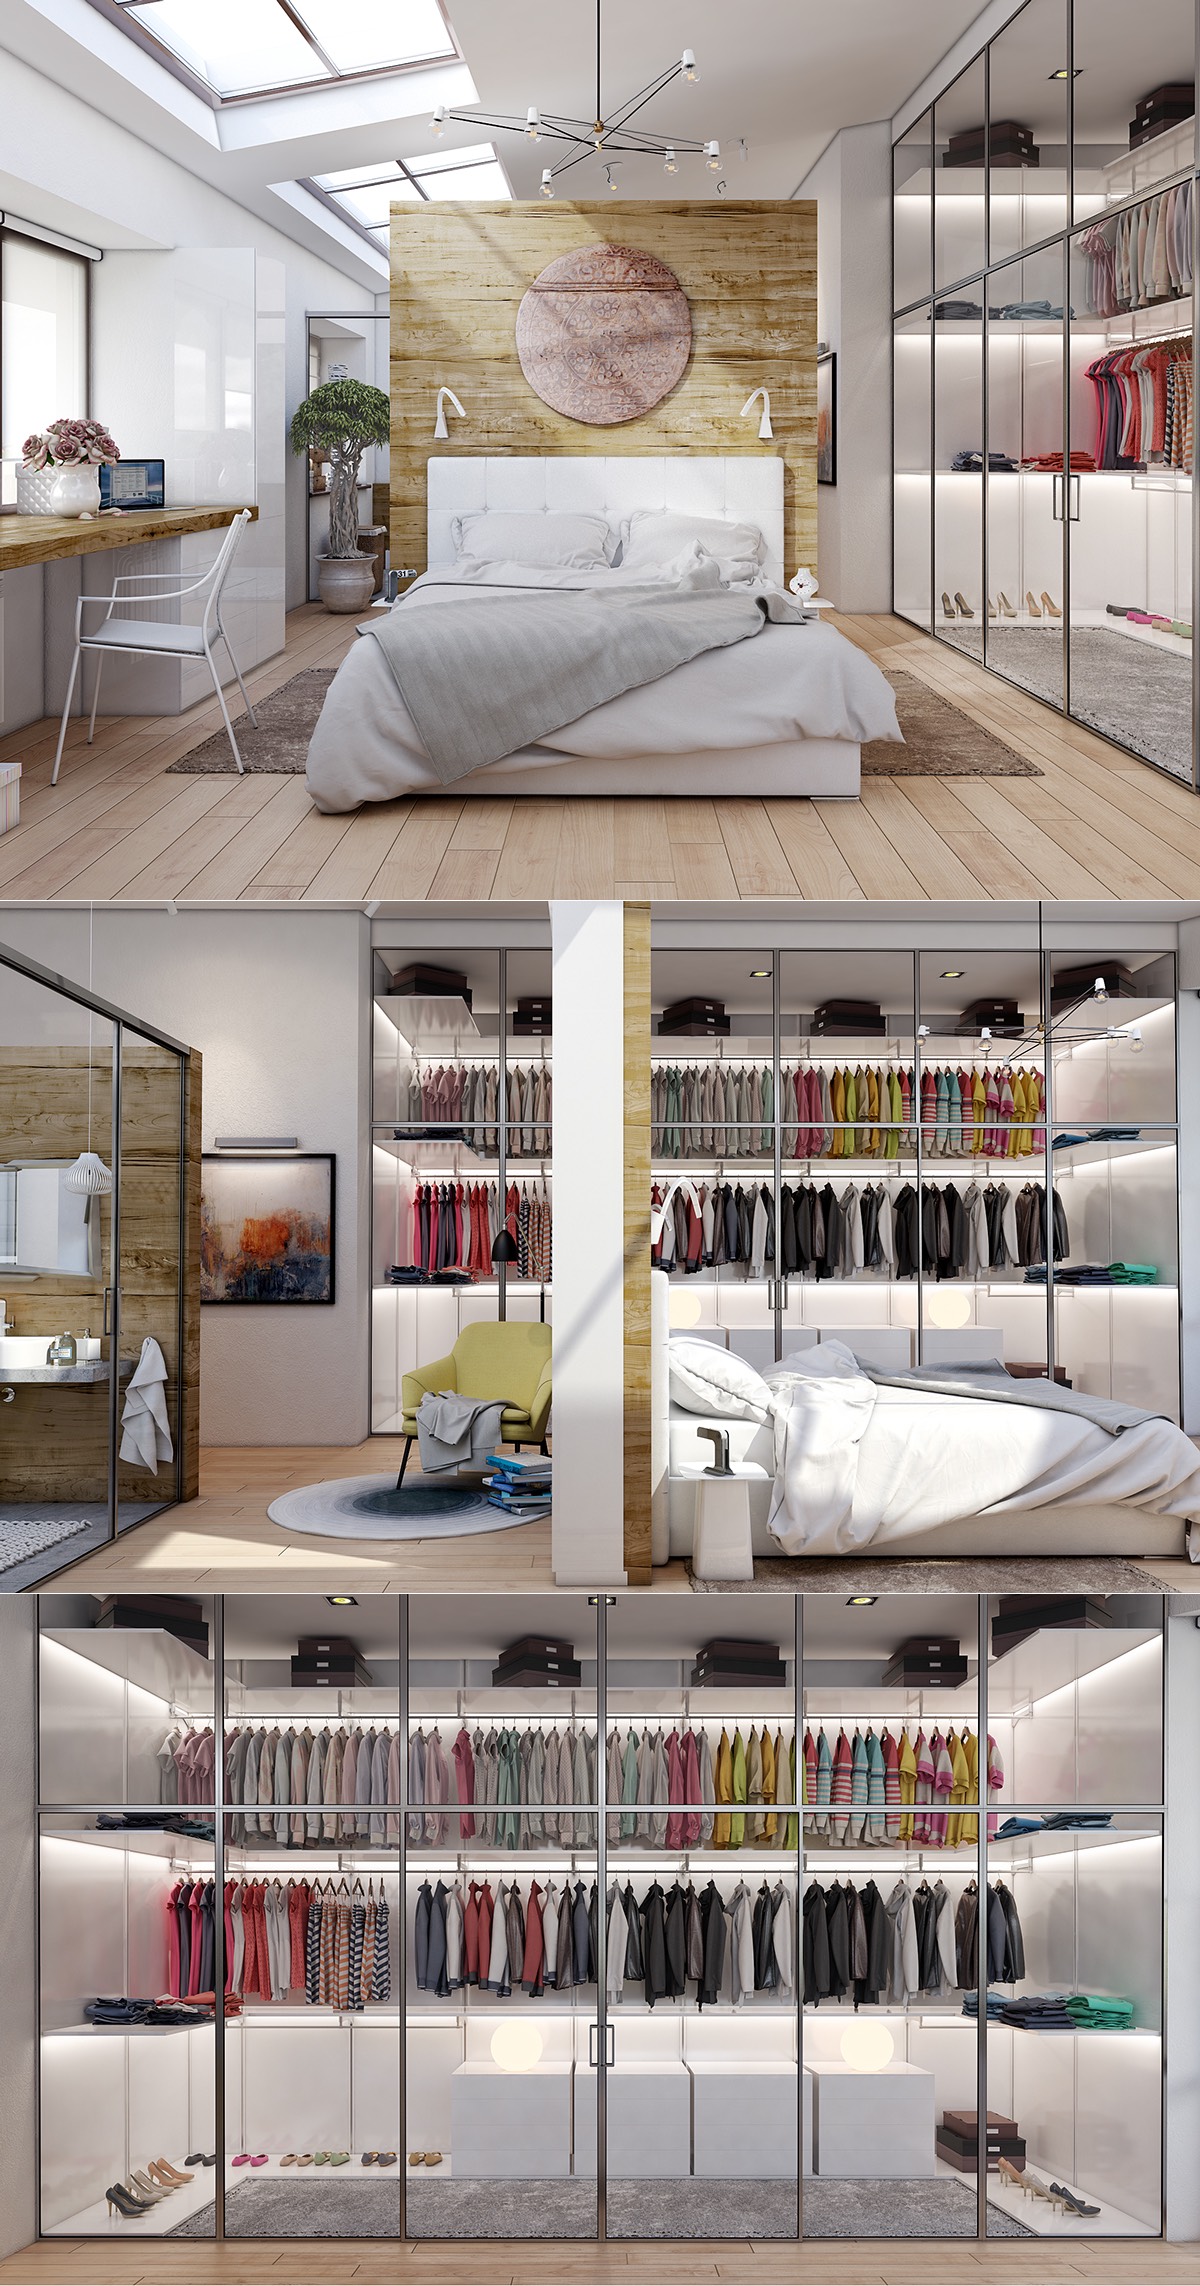 Interior design ideas "width =" 1200 "height =" 2286 "srcset =" https://mileray.com/wp-content/uploads/2020/05/1588511505_89_15-Luxury-Bedroom-Design-With-Elegant-Wardrobe.jpg 1200w, https : //mileray.com/wp-content/uploads/2016/04/bedroom-walk-in-wardrobe-inspiration-157x300.jpg 157w, https://mileray.com/wp-content/uploads/2016/04/ bedroom -walk-in-wardrobe-inspiration-768x1463.jpg 768w, https://mileray.com/wp-content/uploads/2016/04/bedroom-walk-in-wardrobe-inspiration-538x1024.jpg 538w, https: / /mileray.com/wp-content/uploads/2016/04/bedroom-walk-in-wardrobe-inspiration-696x1326.jpg 696w, https://mileray.com/wp-content/uploads/2016/04/bedroom - walk-in wardrobe-inspiration-1068x2035.jpg 1068w, https://mileray.com/wp-content/uploads/2016/04/bedroom-walk-in-wardrobe-inspiration-220x420.jpg 220w "sizes =" (maximum width : 1200px) 100vw, 1200px